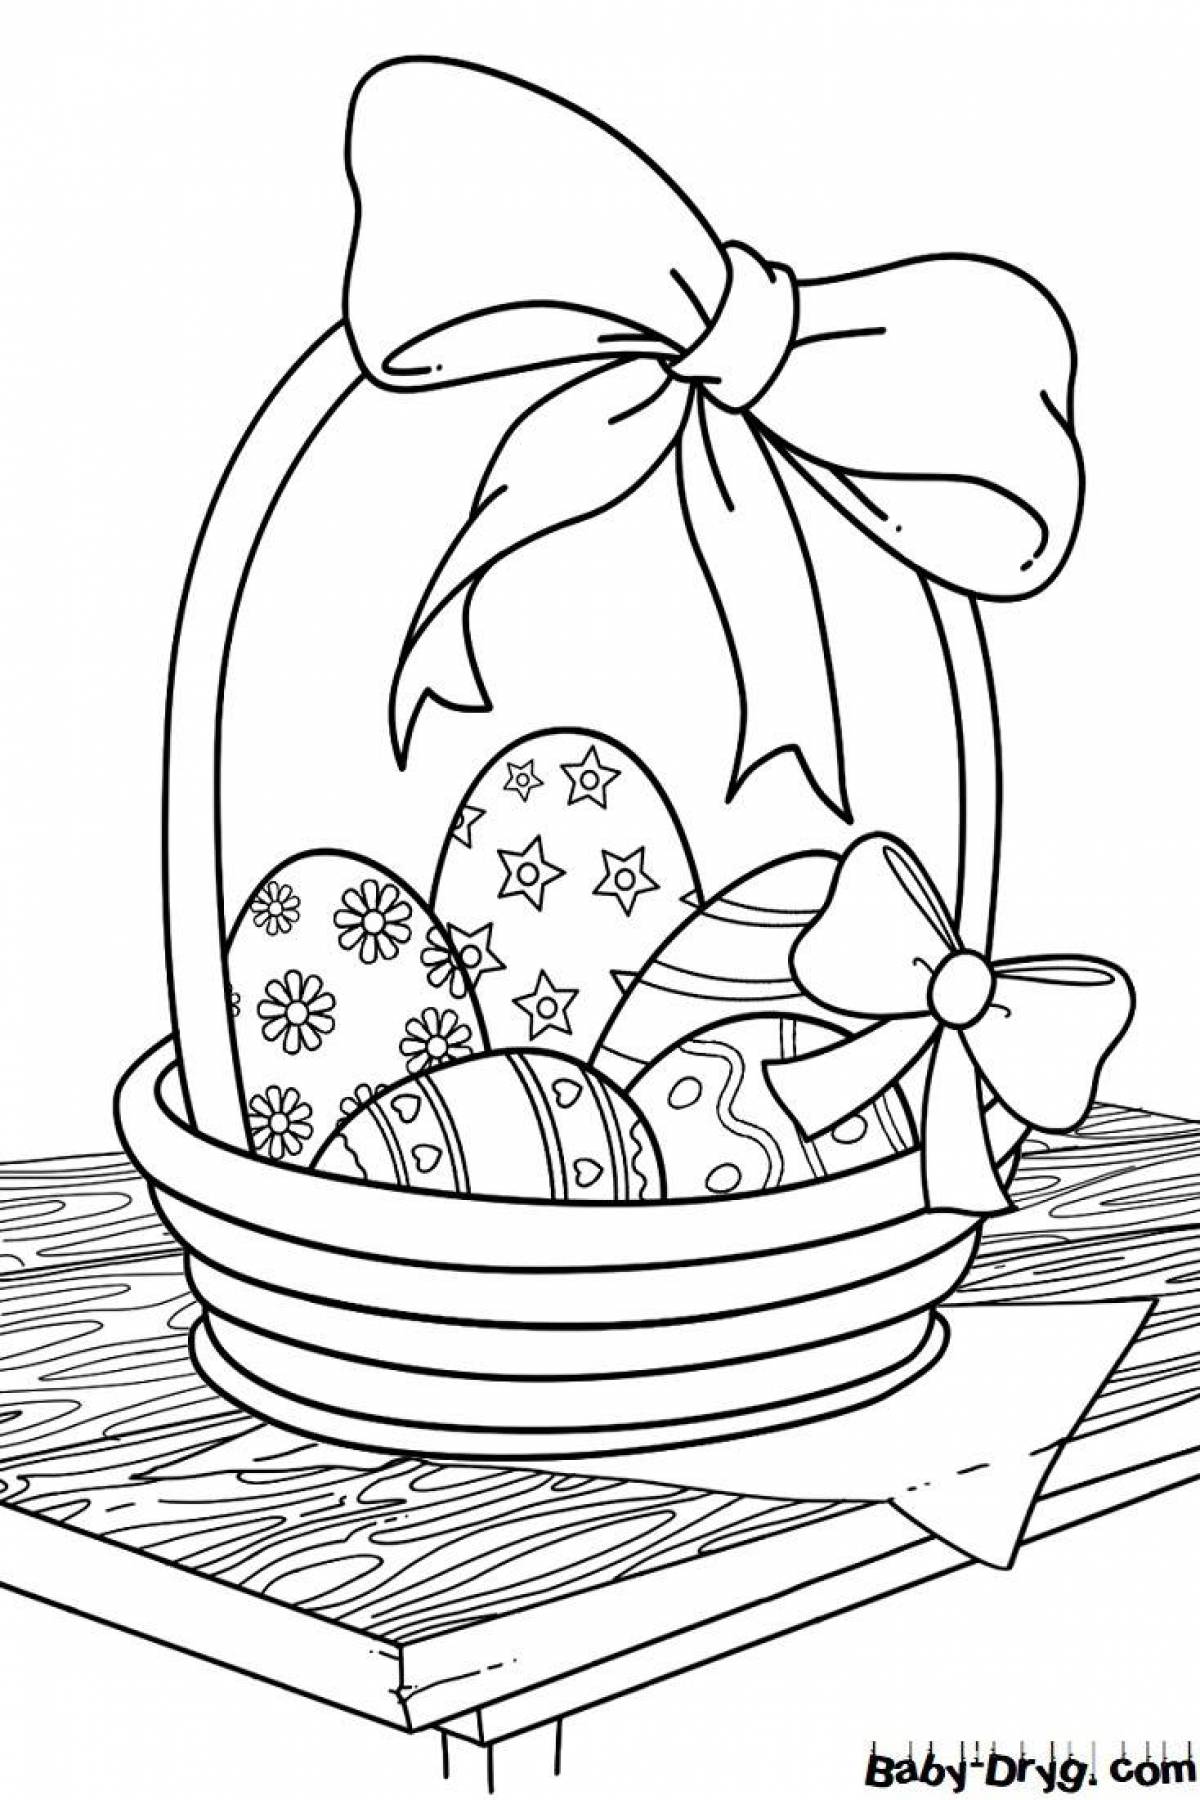 Generous Easter coloring book